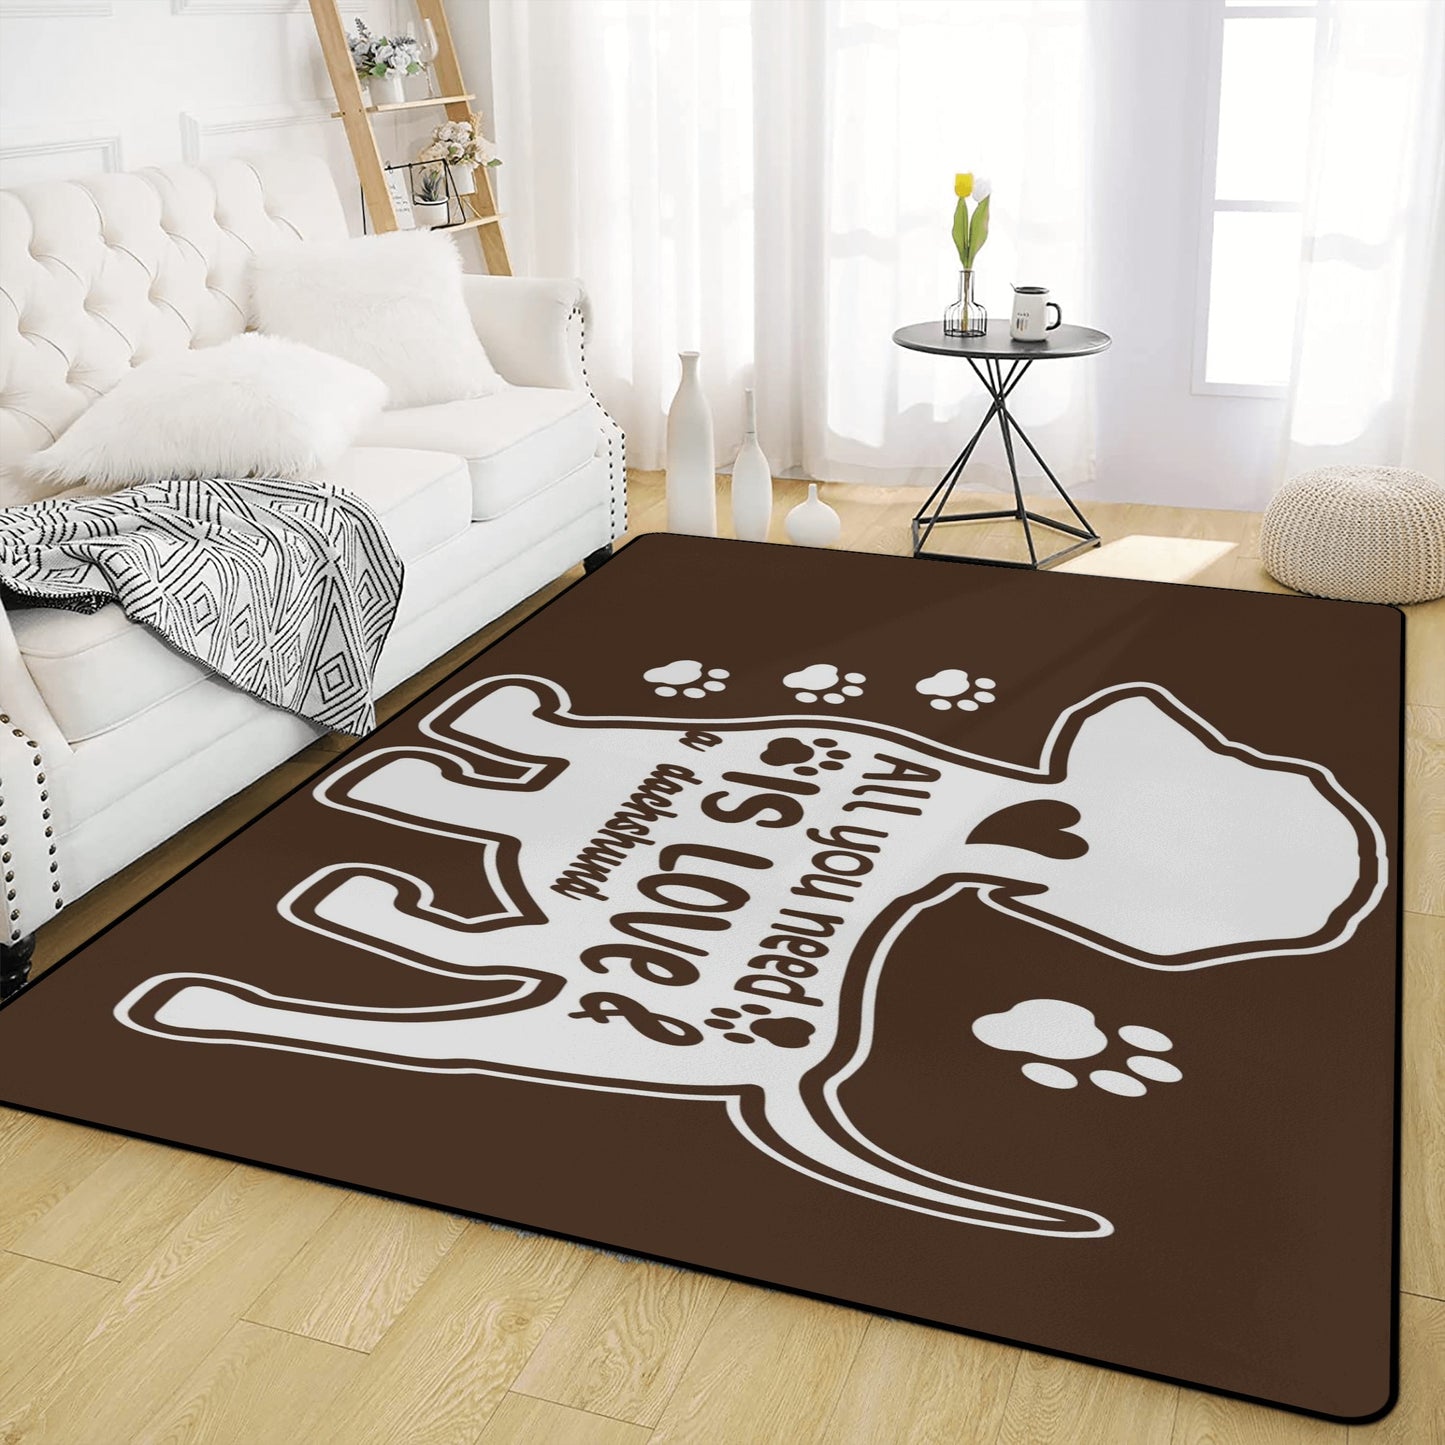 Greta - Living Room Carpet Rug